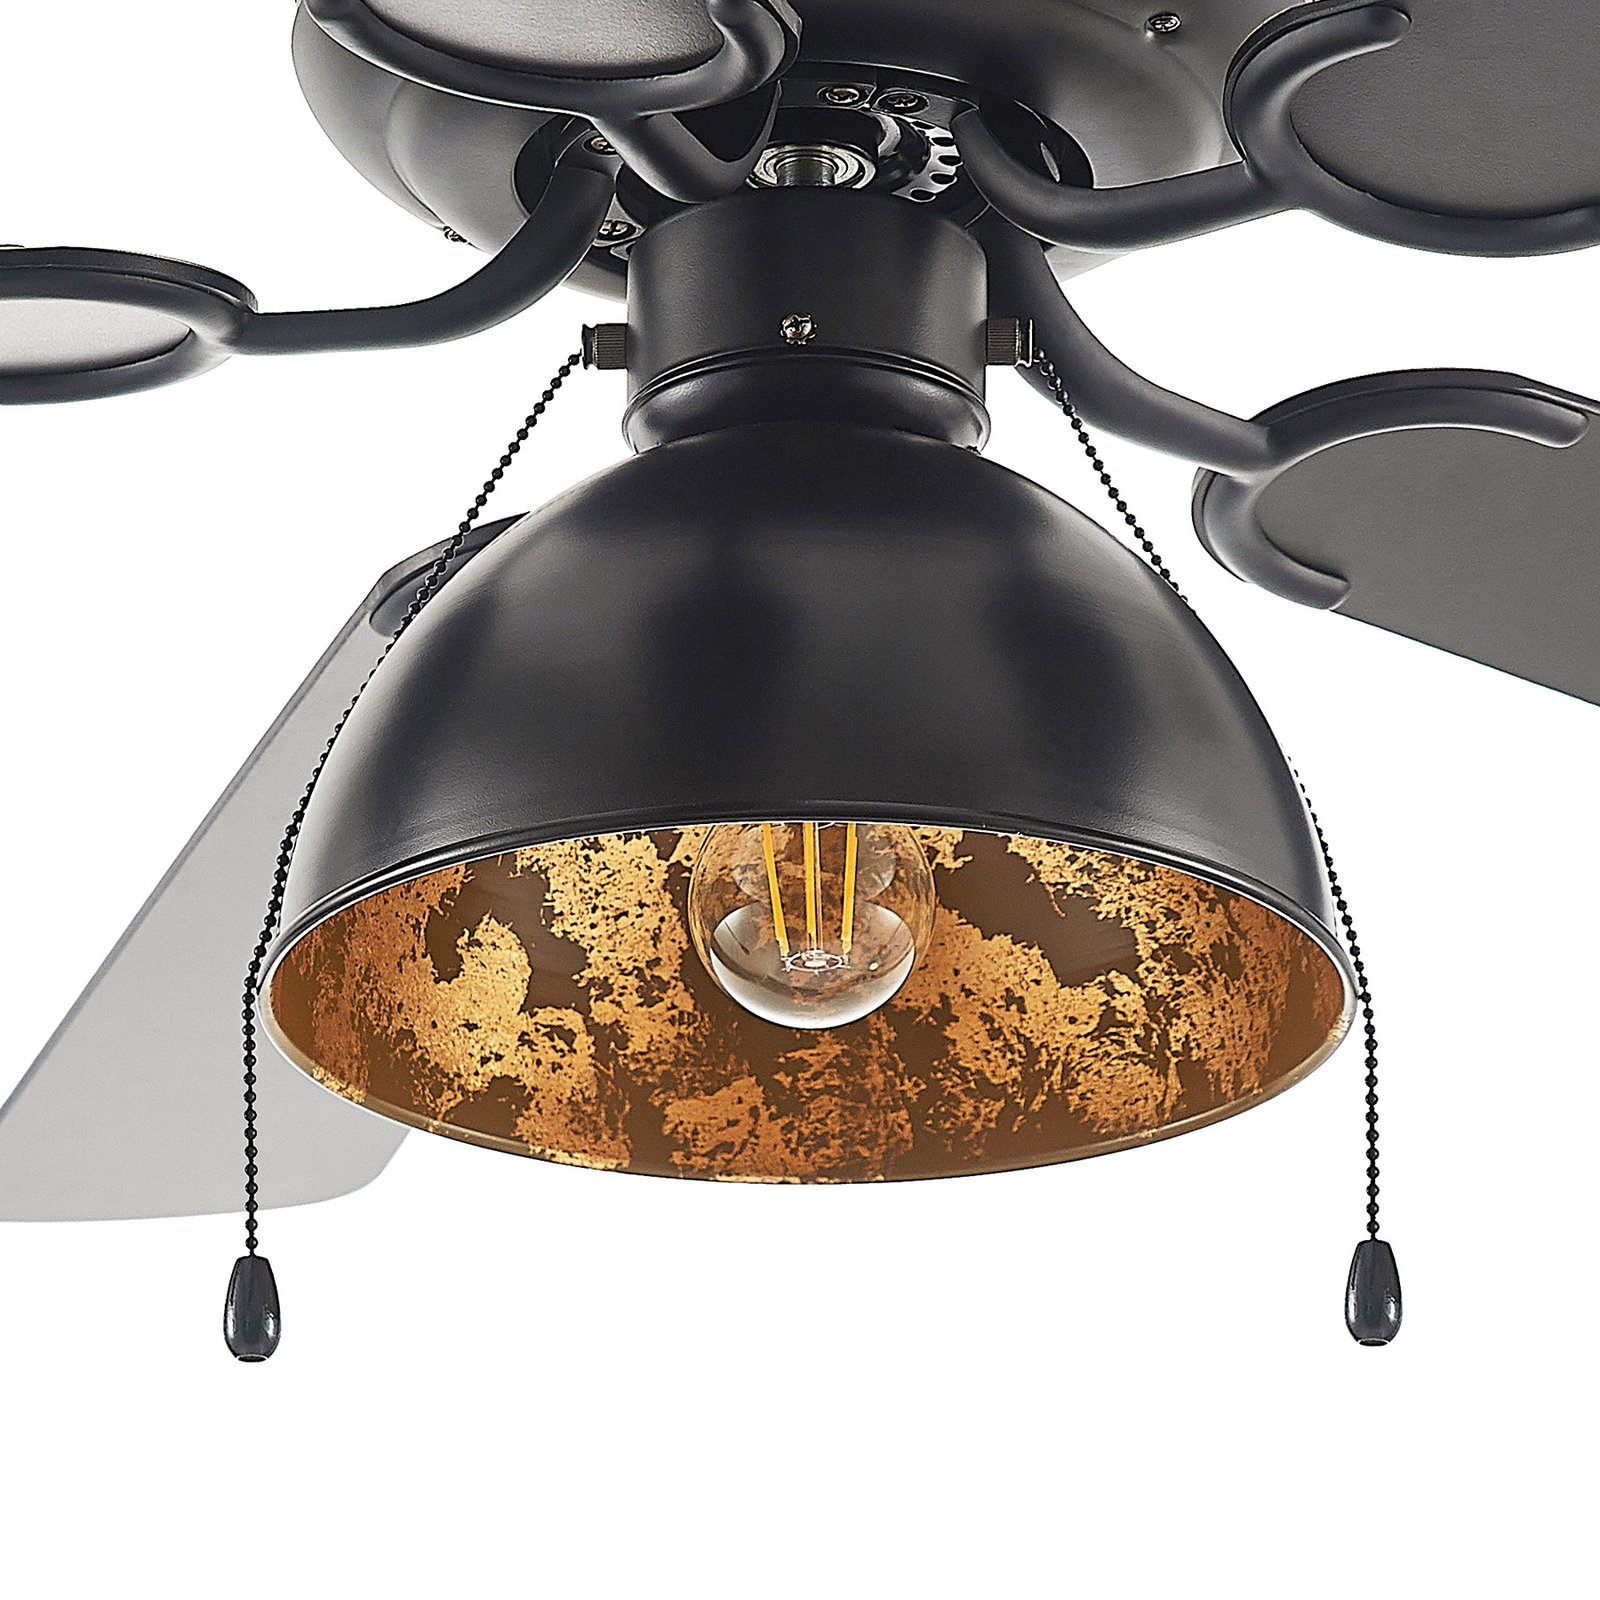 Lucande ceiling fan with light Shamoian, quiet, Ø 130 cm